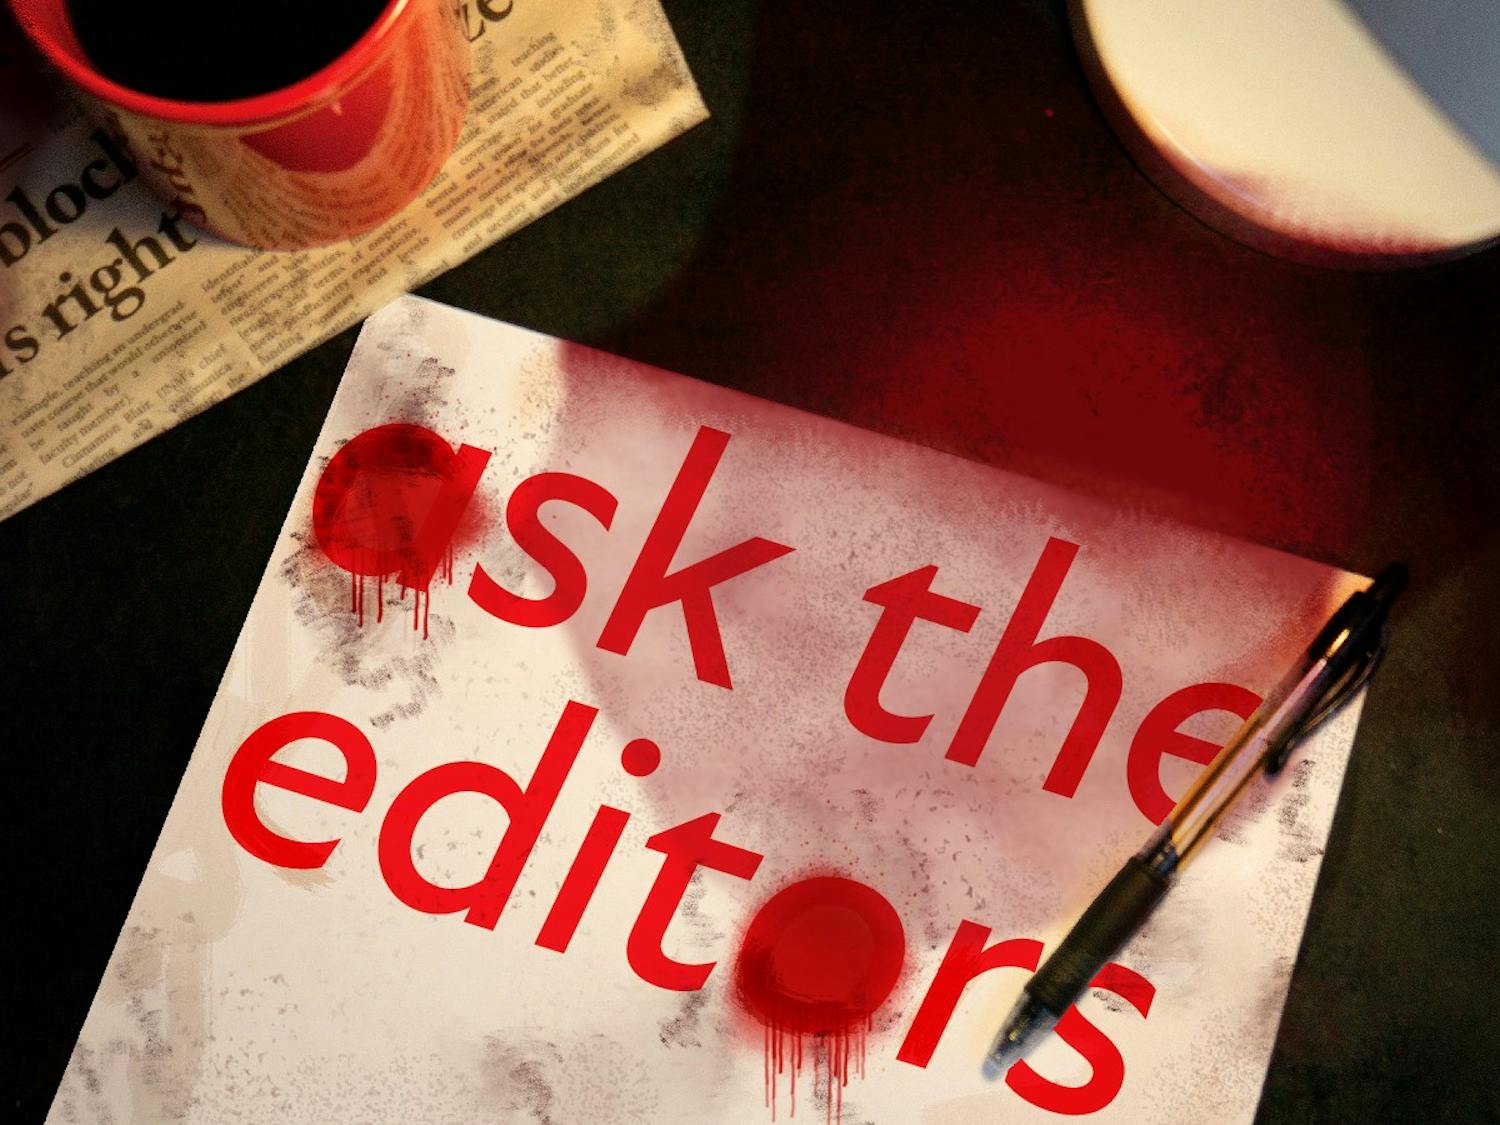 Ask the editors (but spooky)